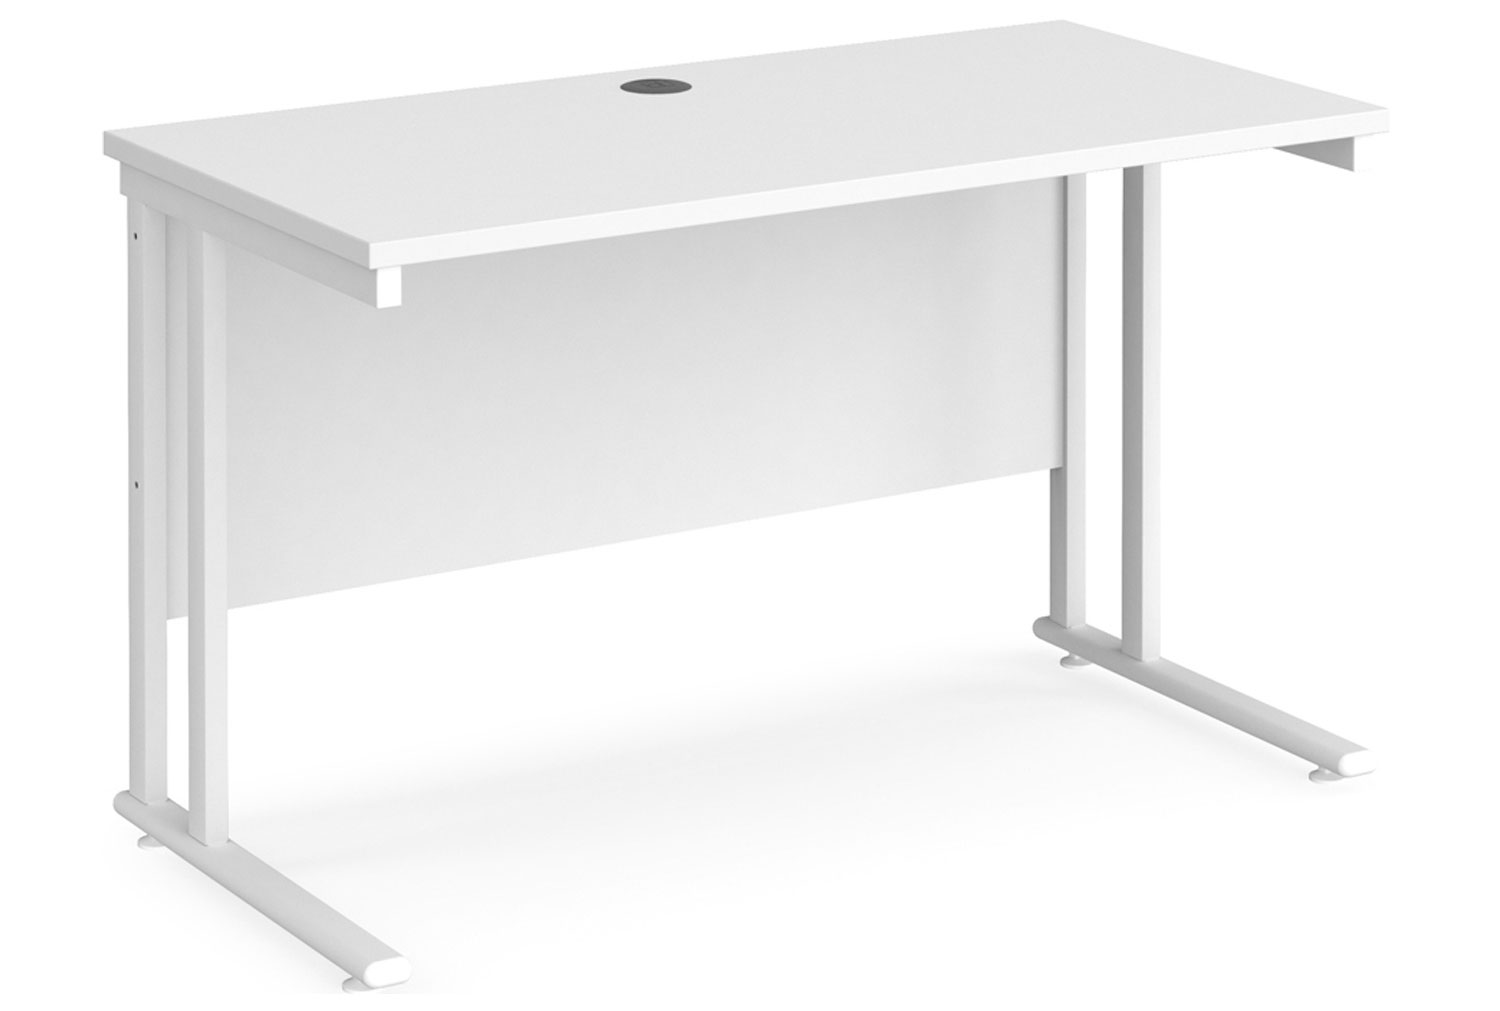 Value Line Deluxe C-Leg Narrow Rectangular Office Desk (White Legs), 120wx60dx73h (cm), White, Express Delivery